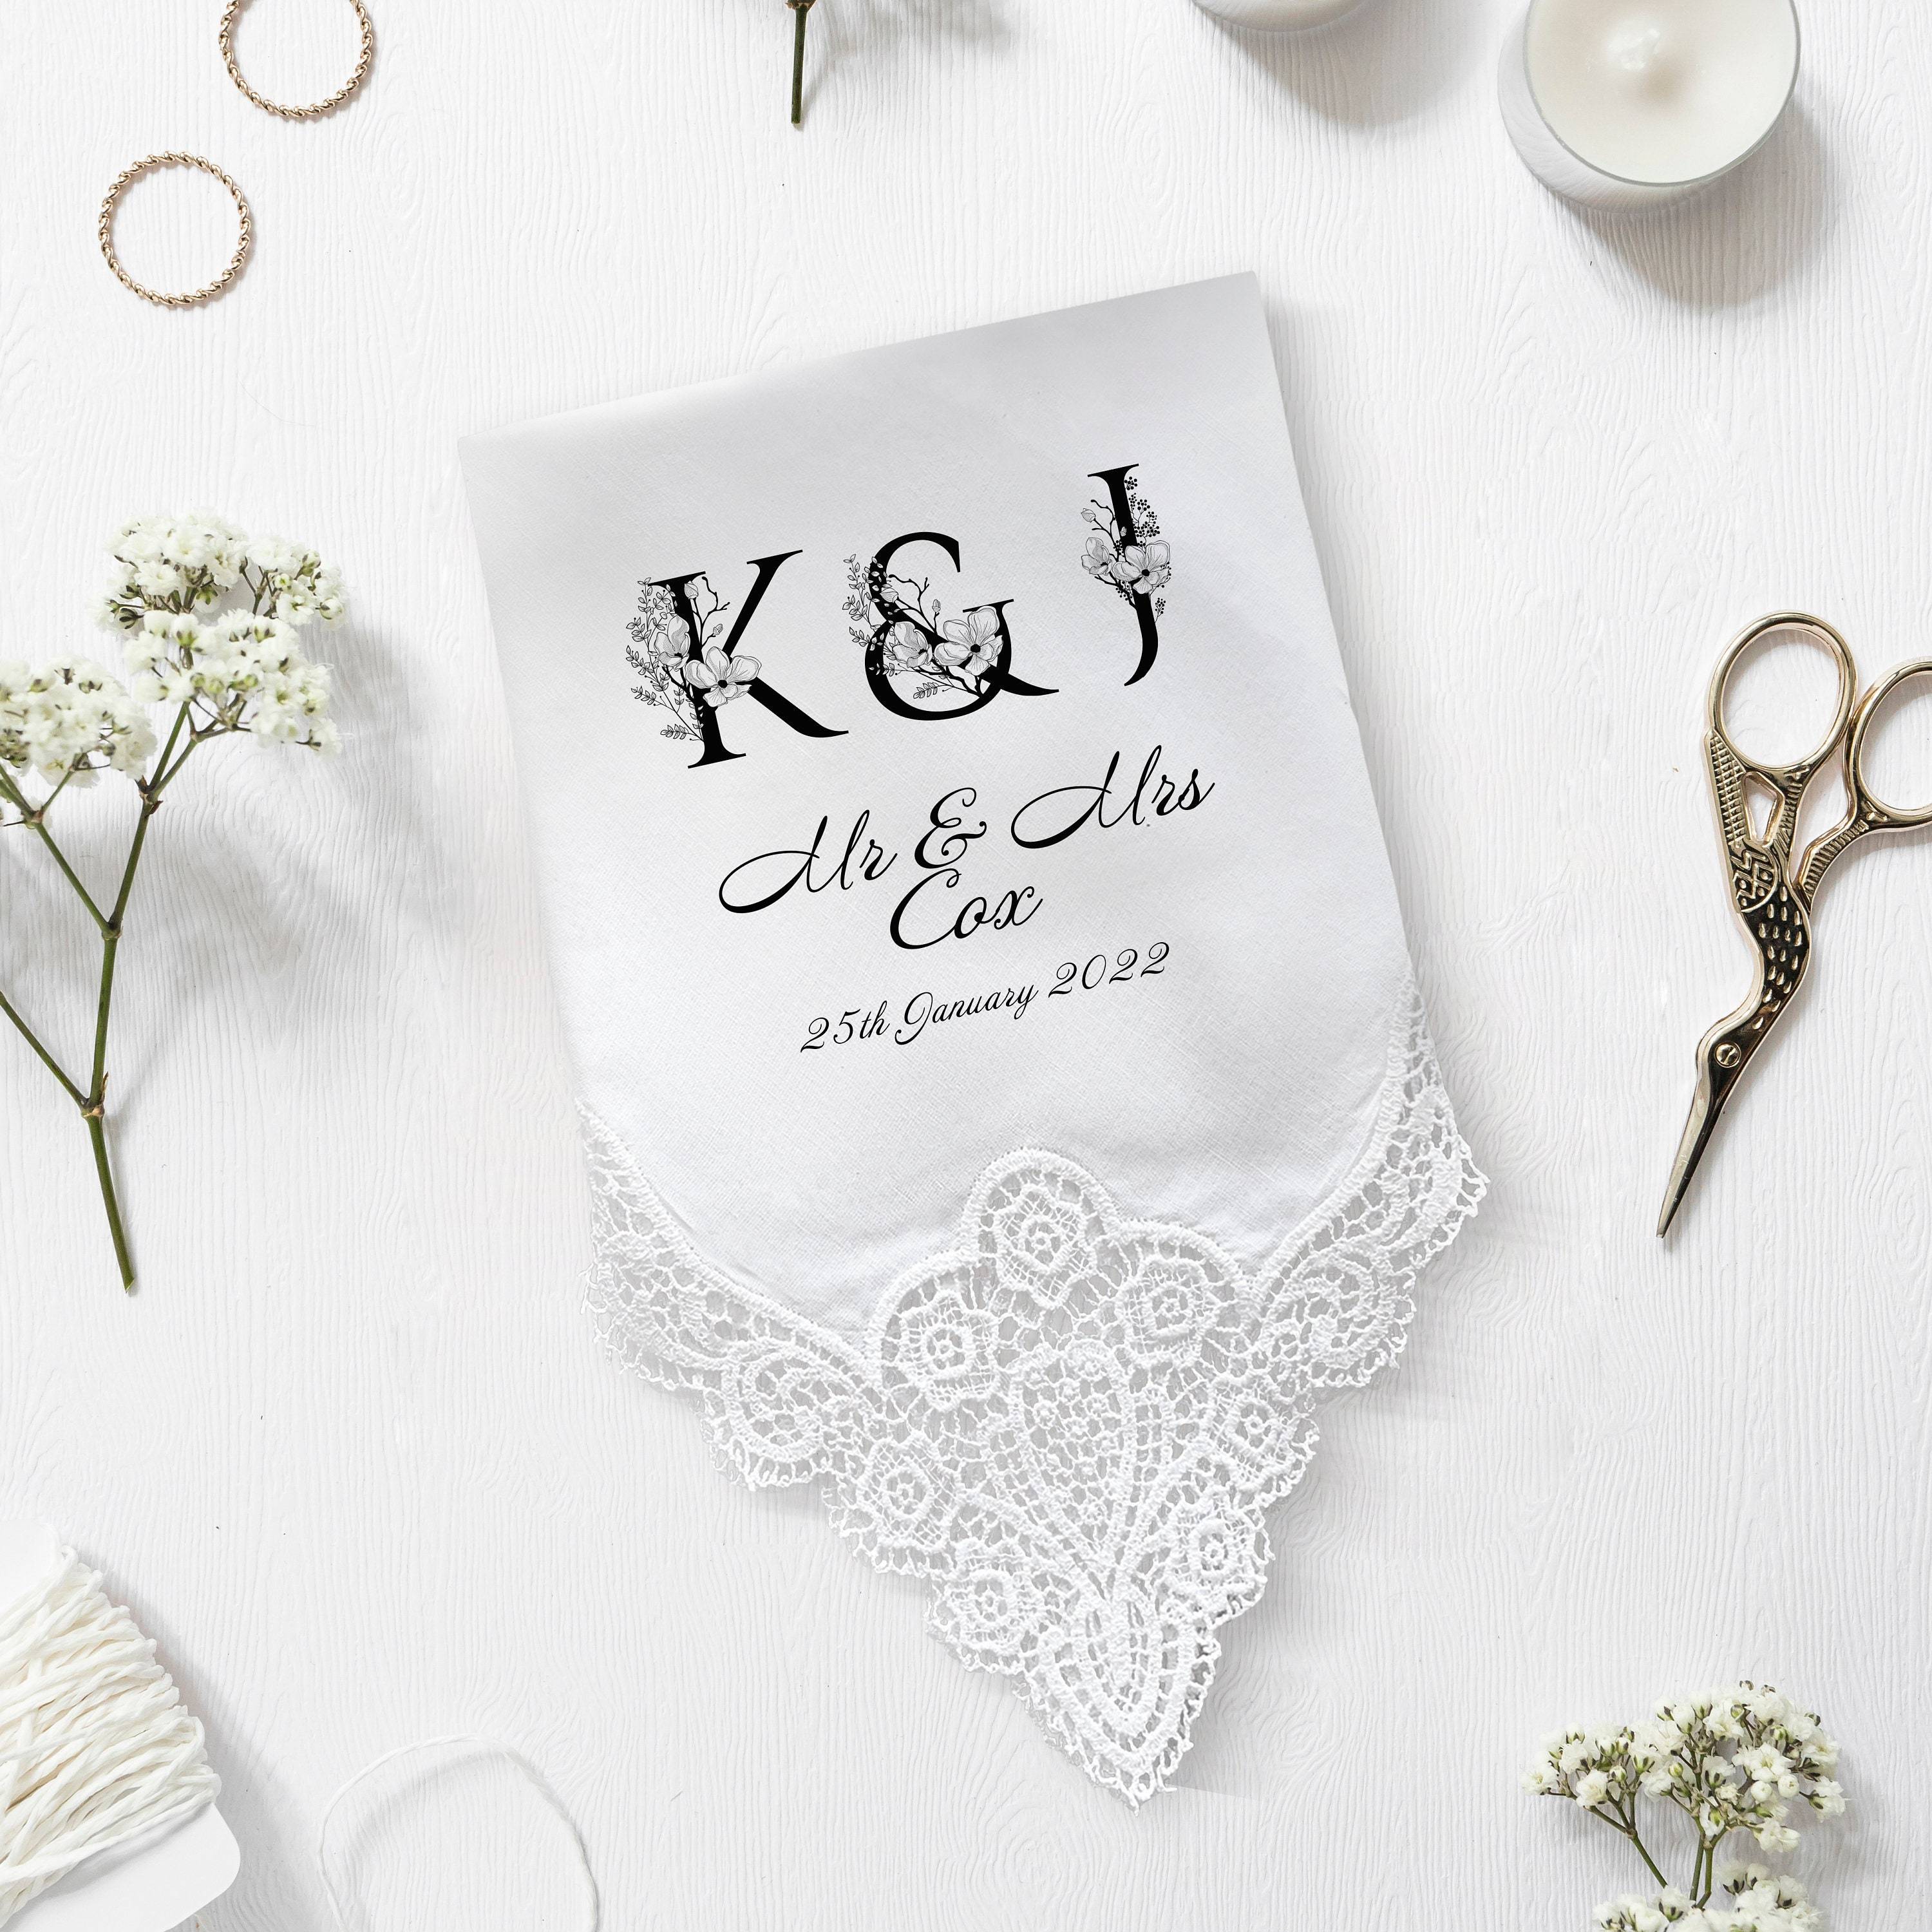 Personalised wedding handkerchief with initials, last name, wedding date